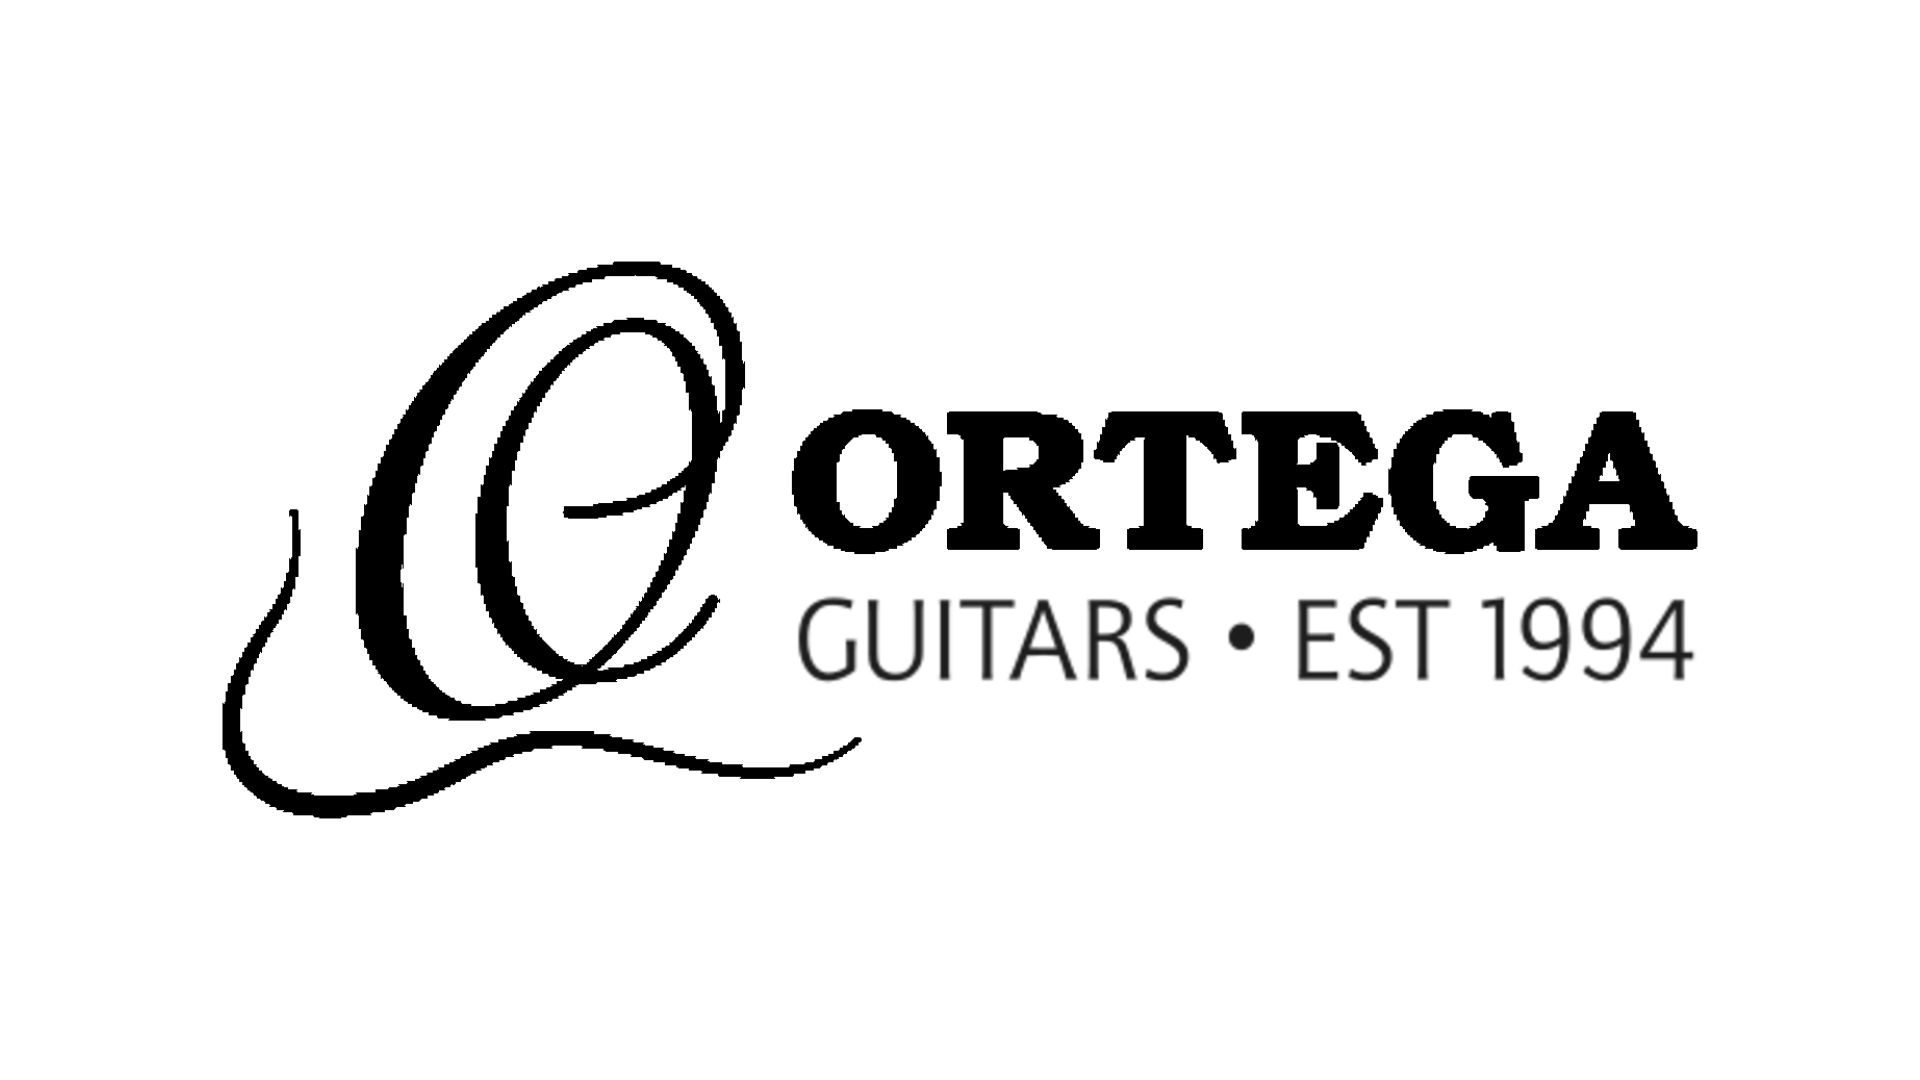 Ortega Logo